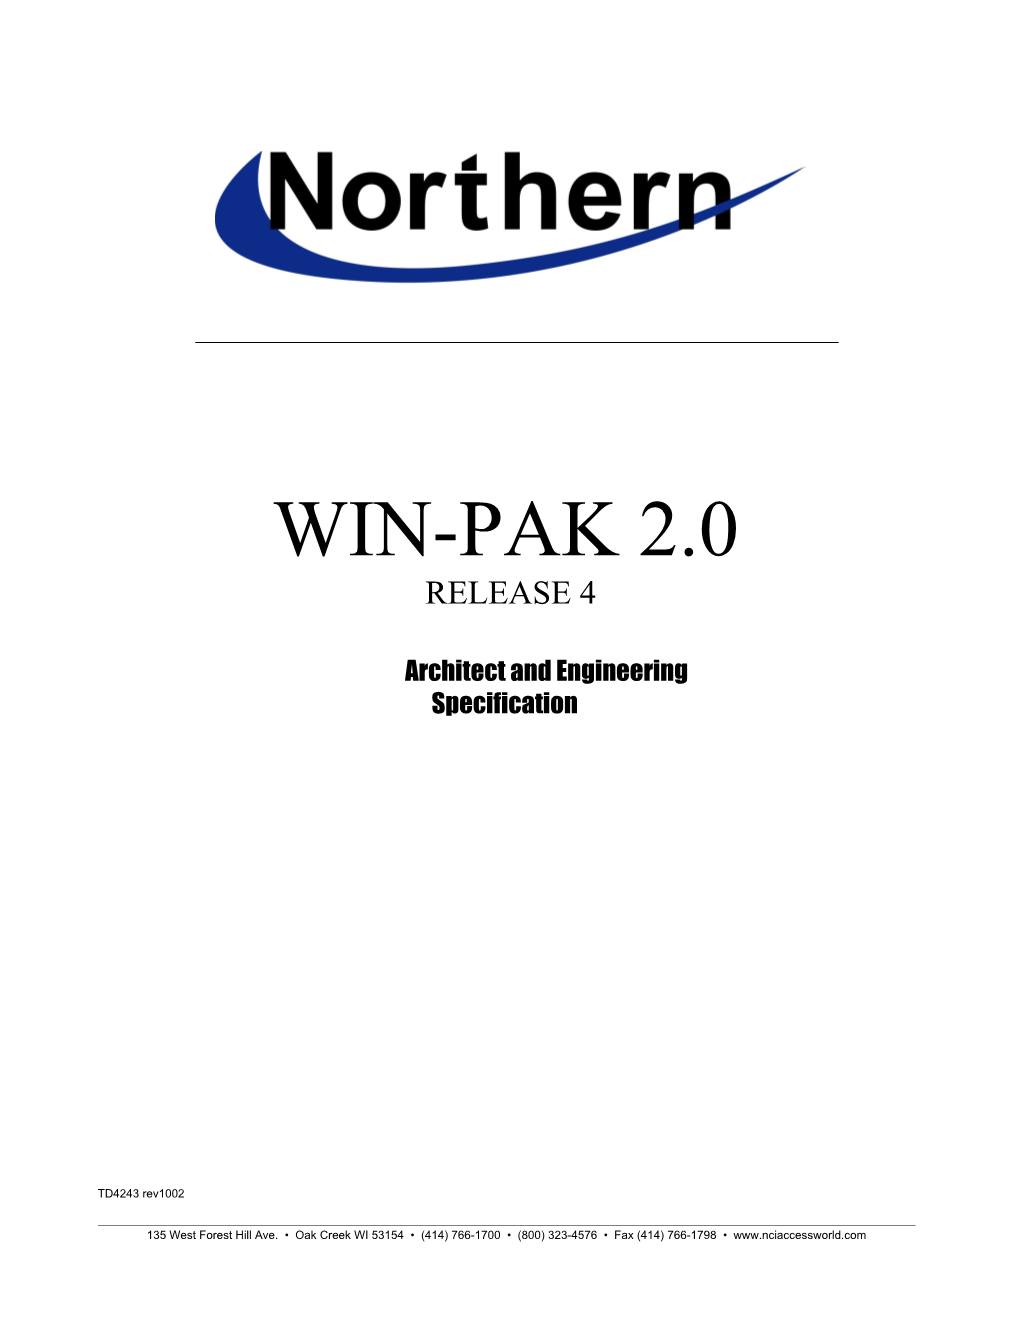 WIN-PAK 2.0 A&E Specification 39